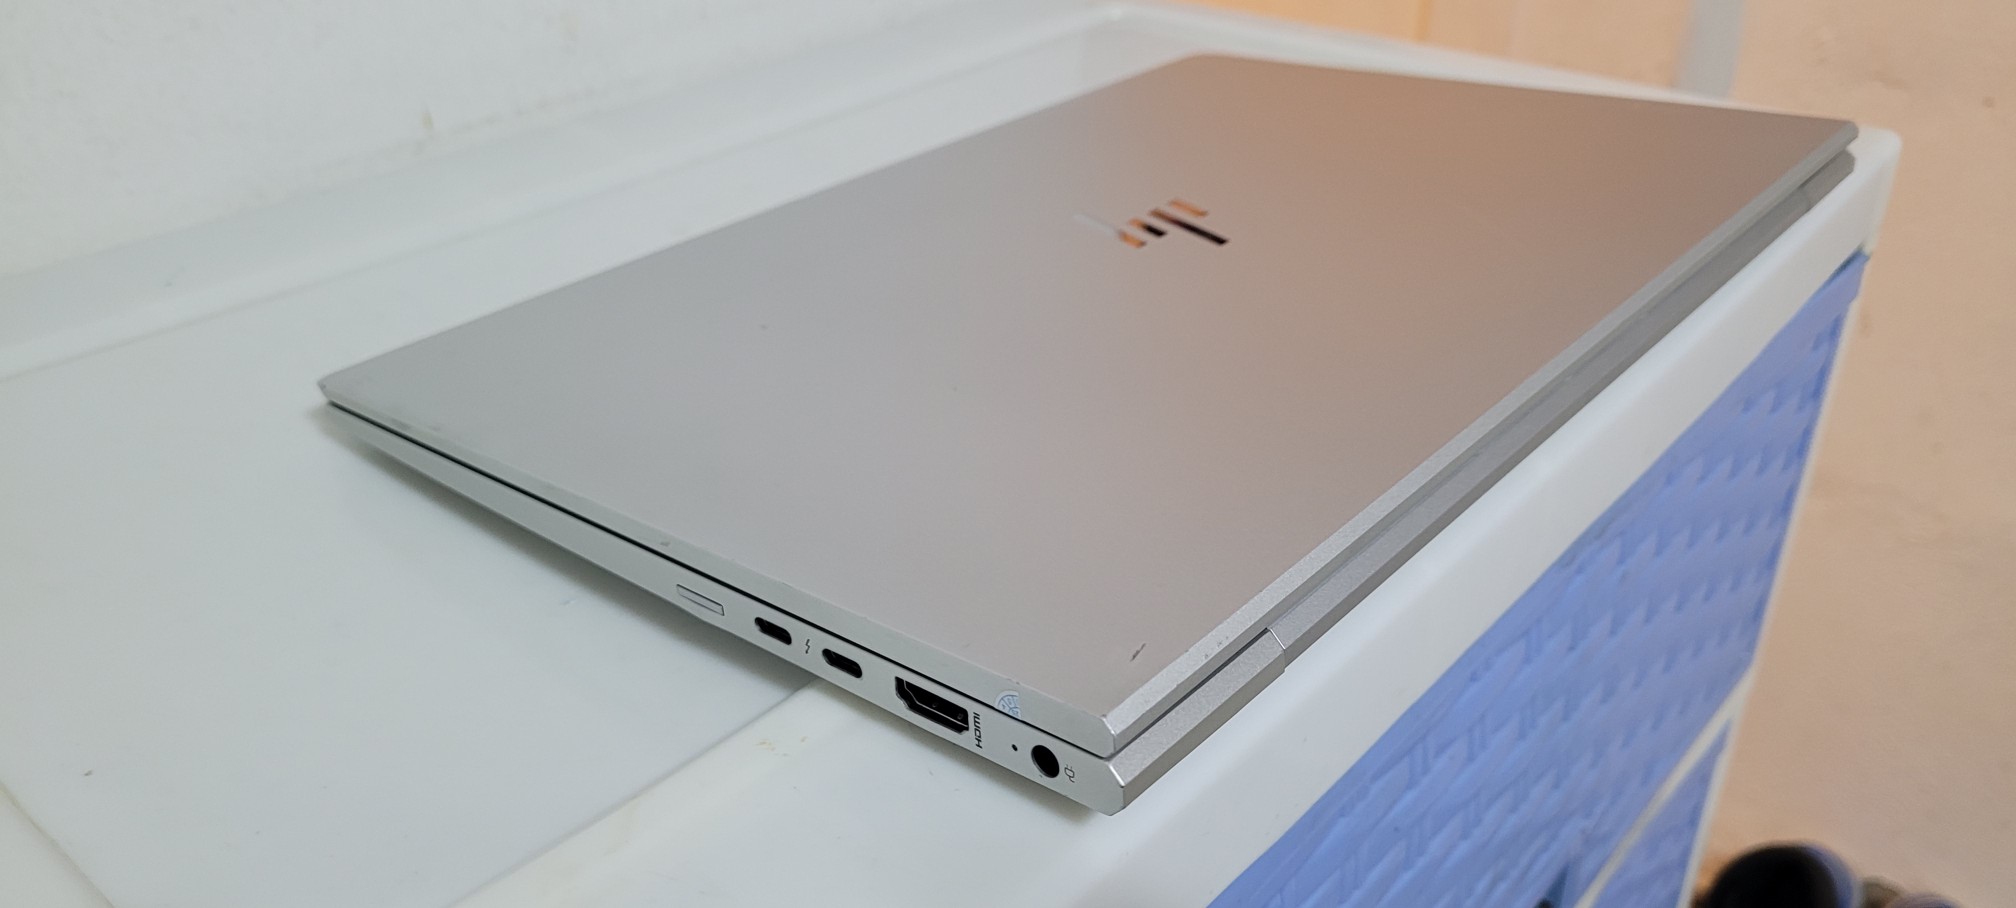 computadoras y laptops - Laptop hp Slim 14 Pulg Core i5 8va Gen Ram 8gb ddr4 Disco 256gb new 2